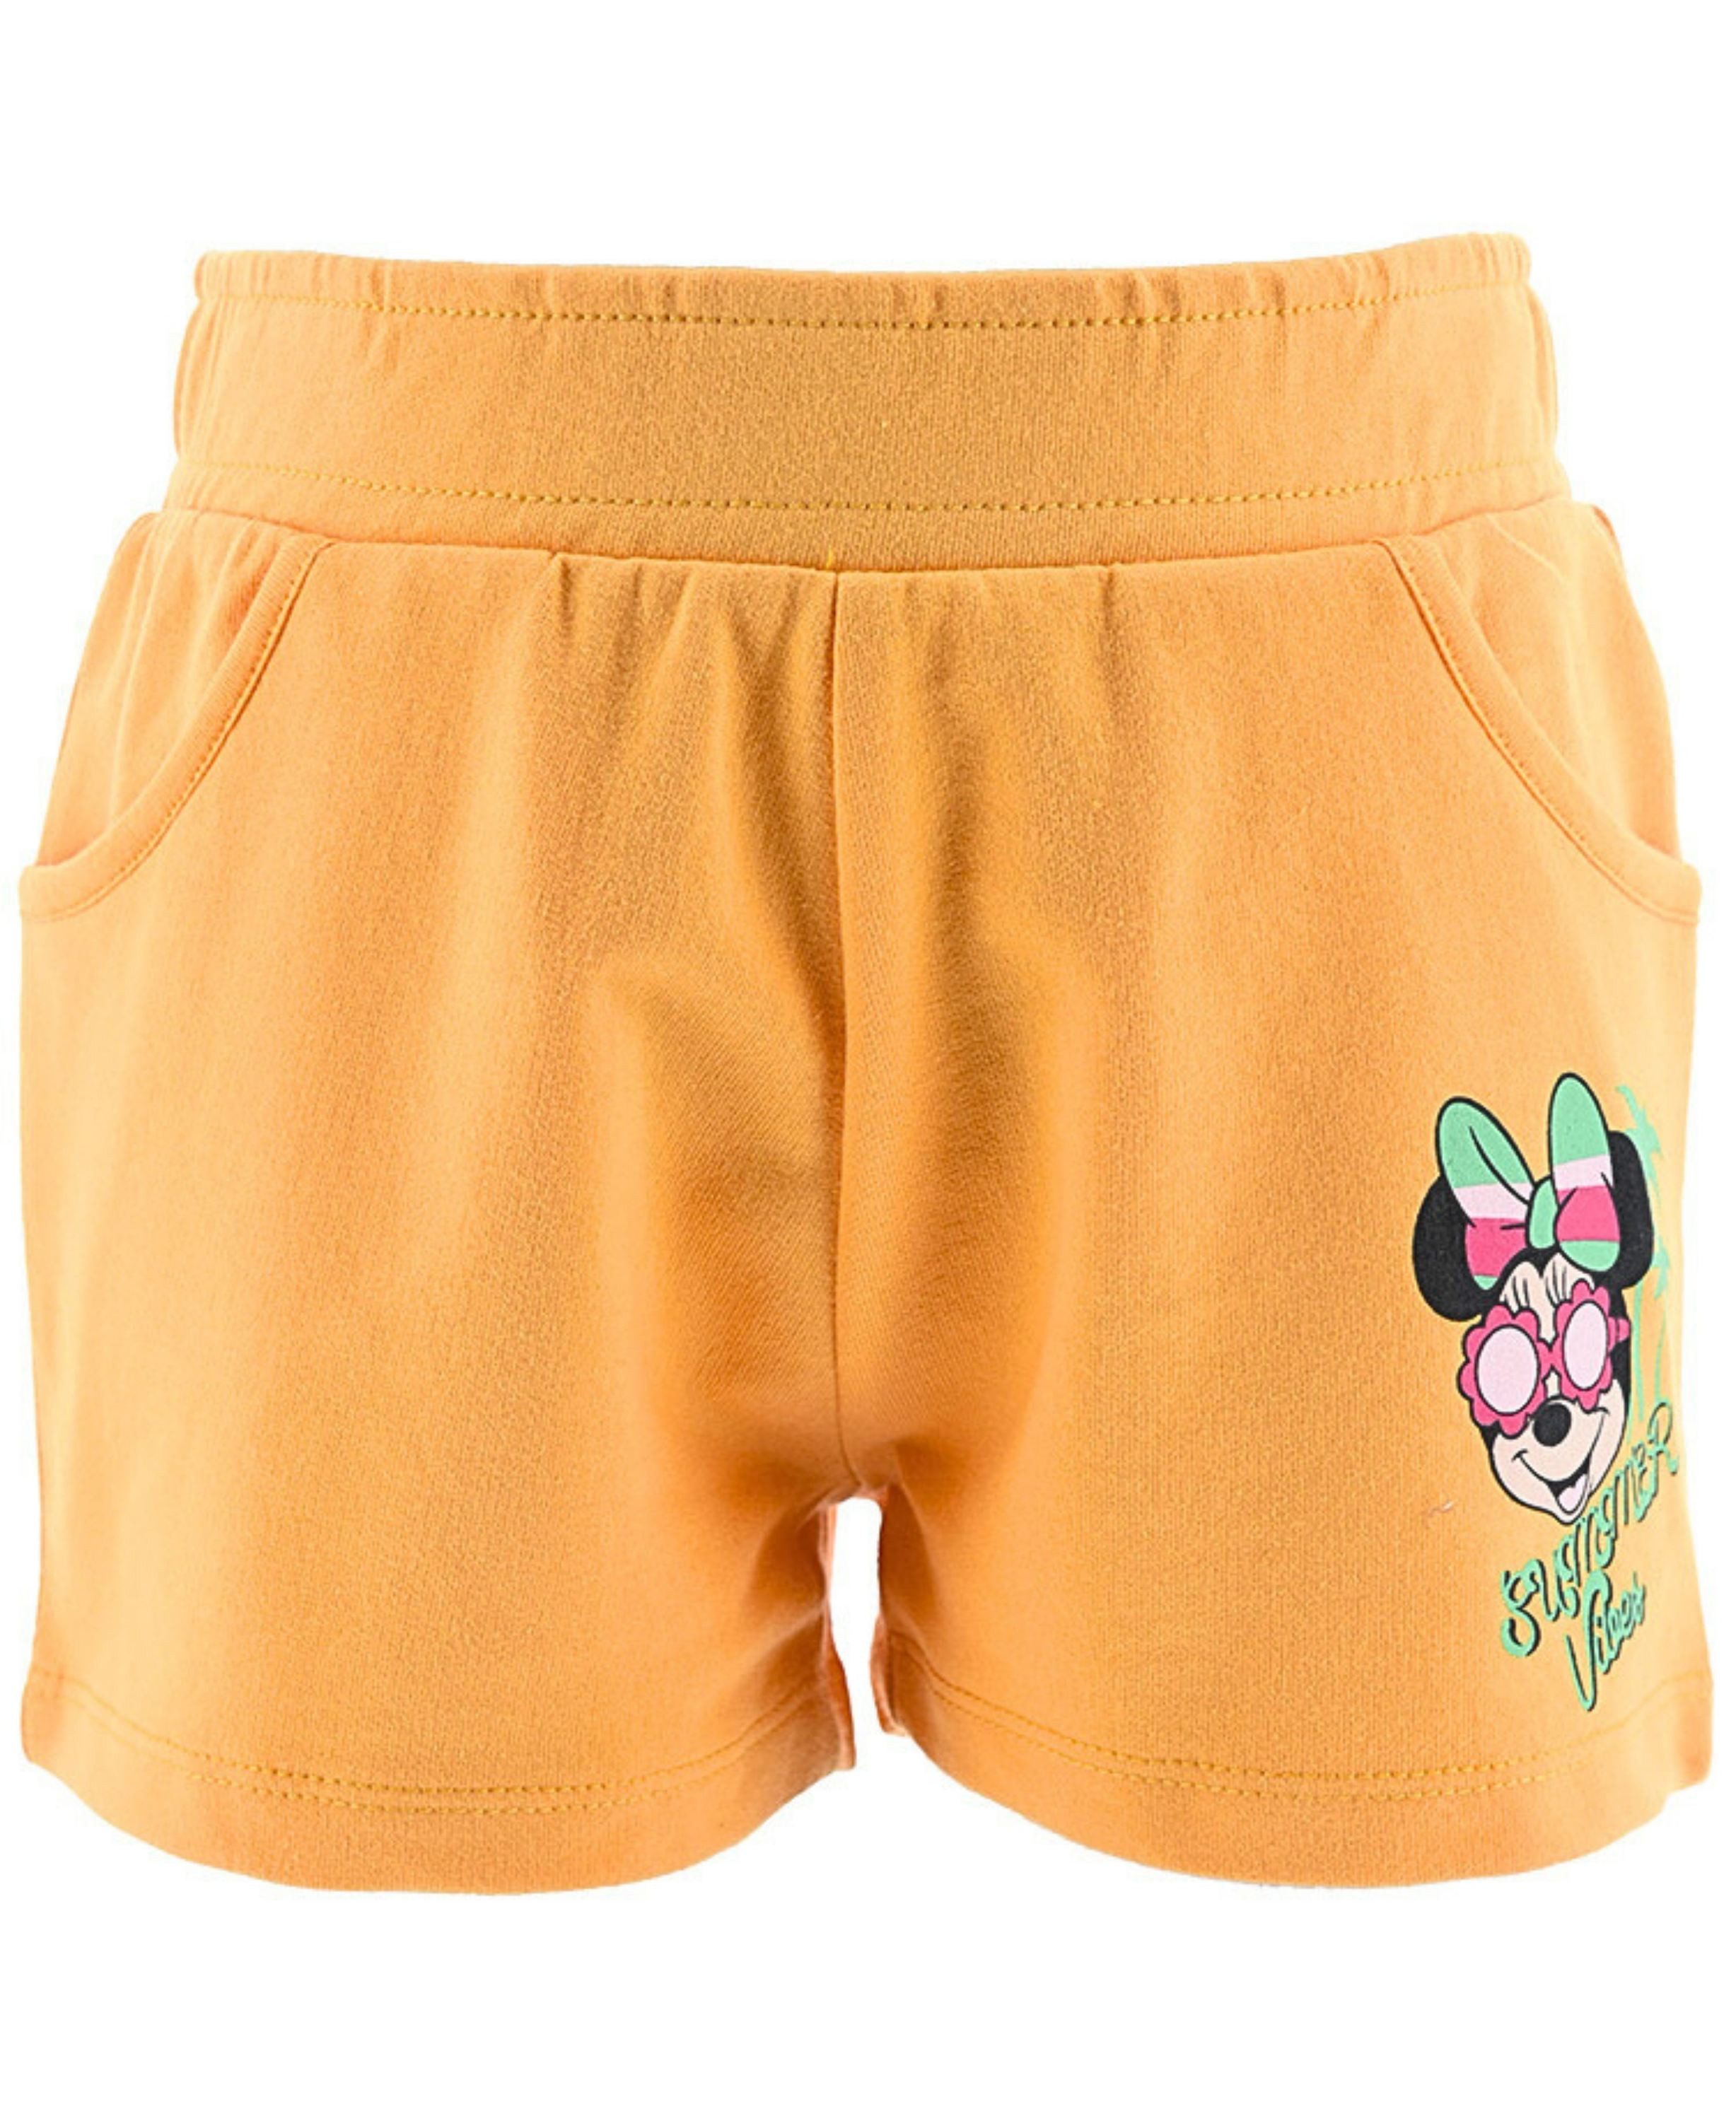 Disney Minnie Mouse Shorts Minnie Maus Summer Vibes Mädchen kurze Hose aus Baumwolle Gr. 98 - 128 cm